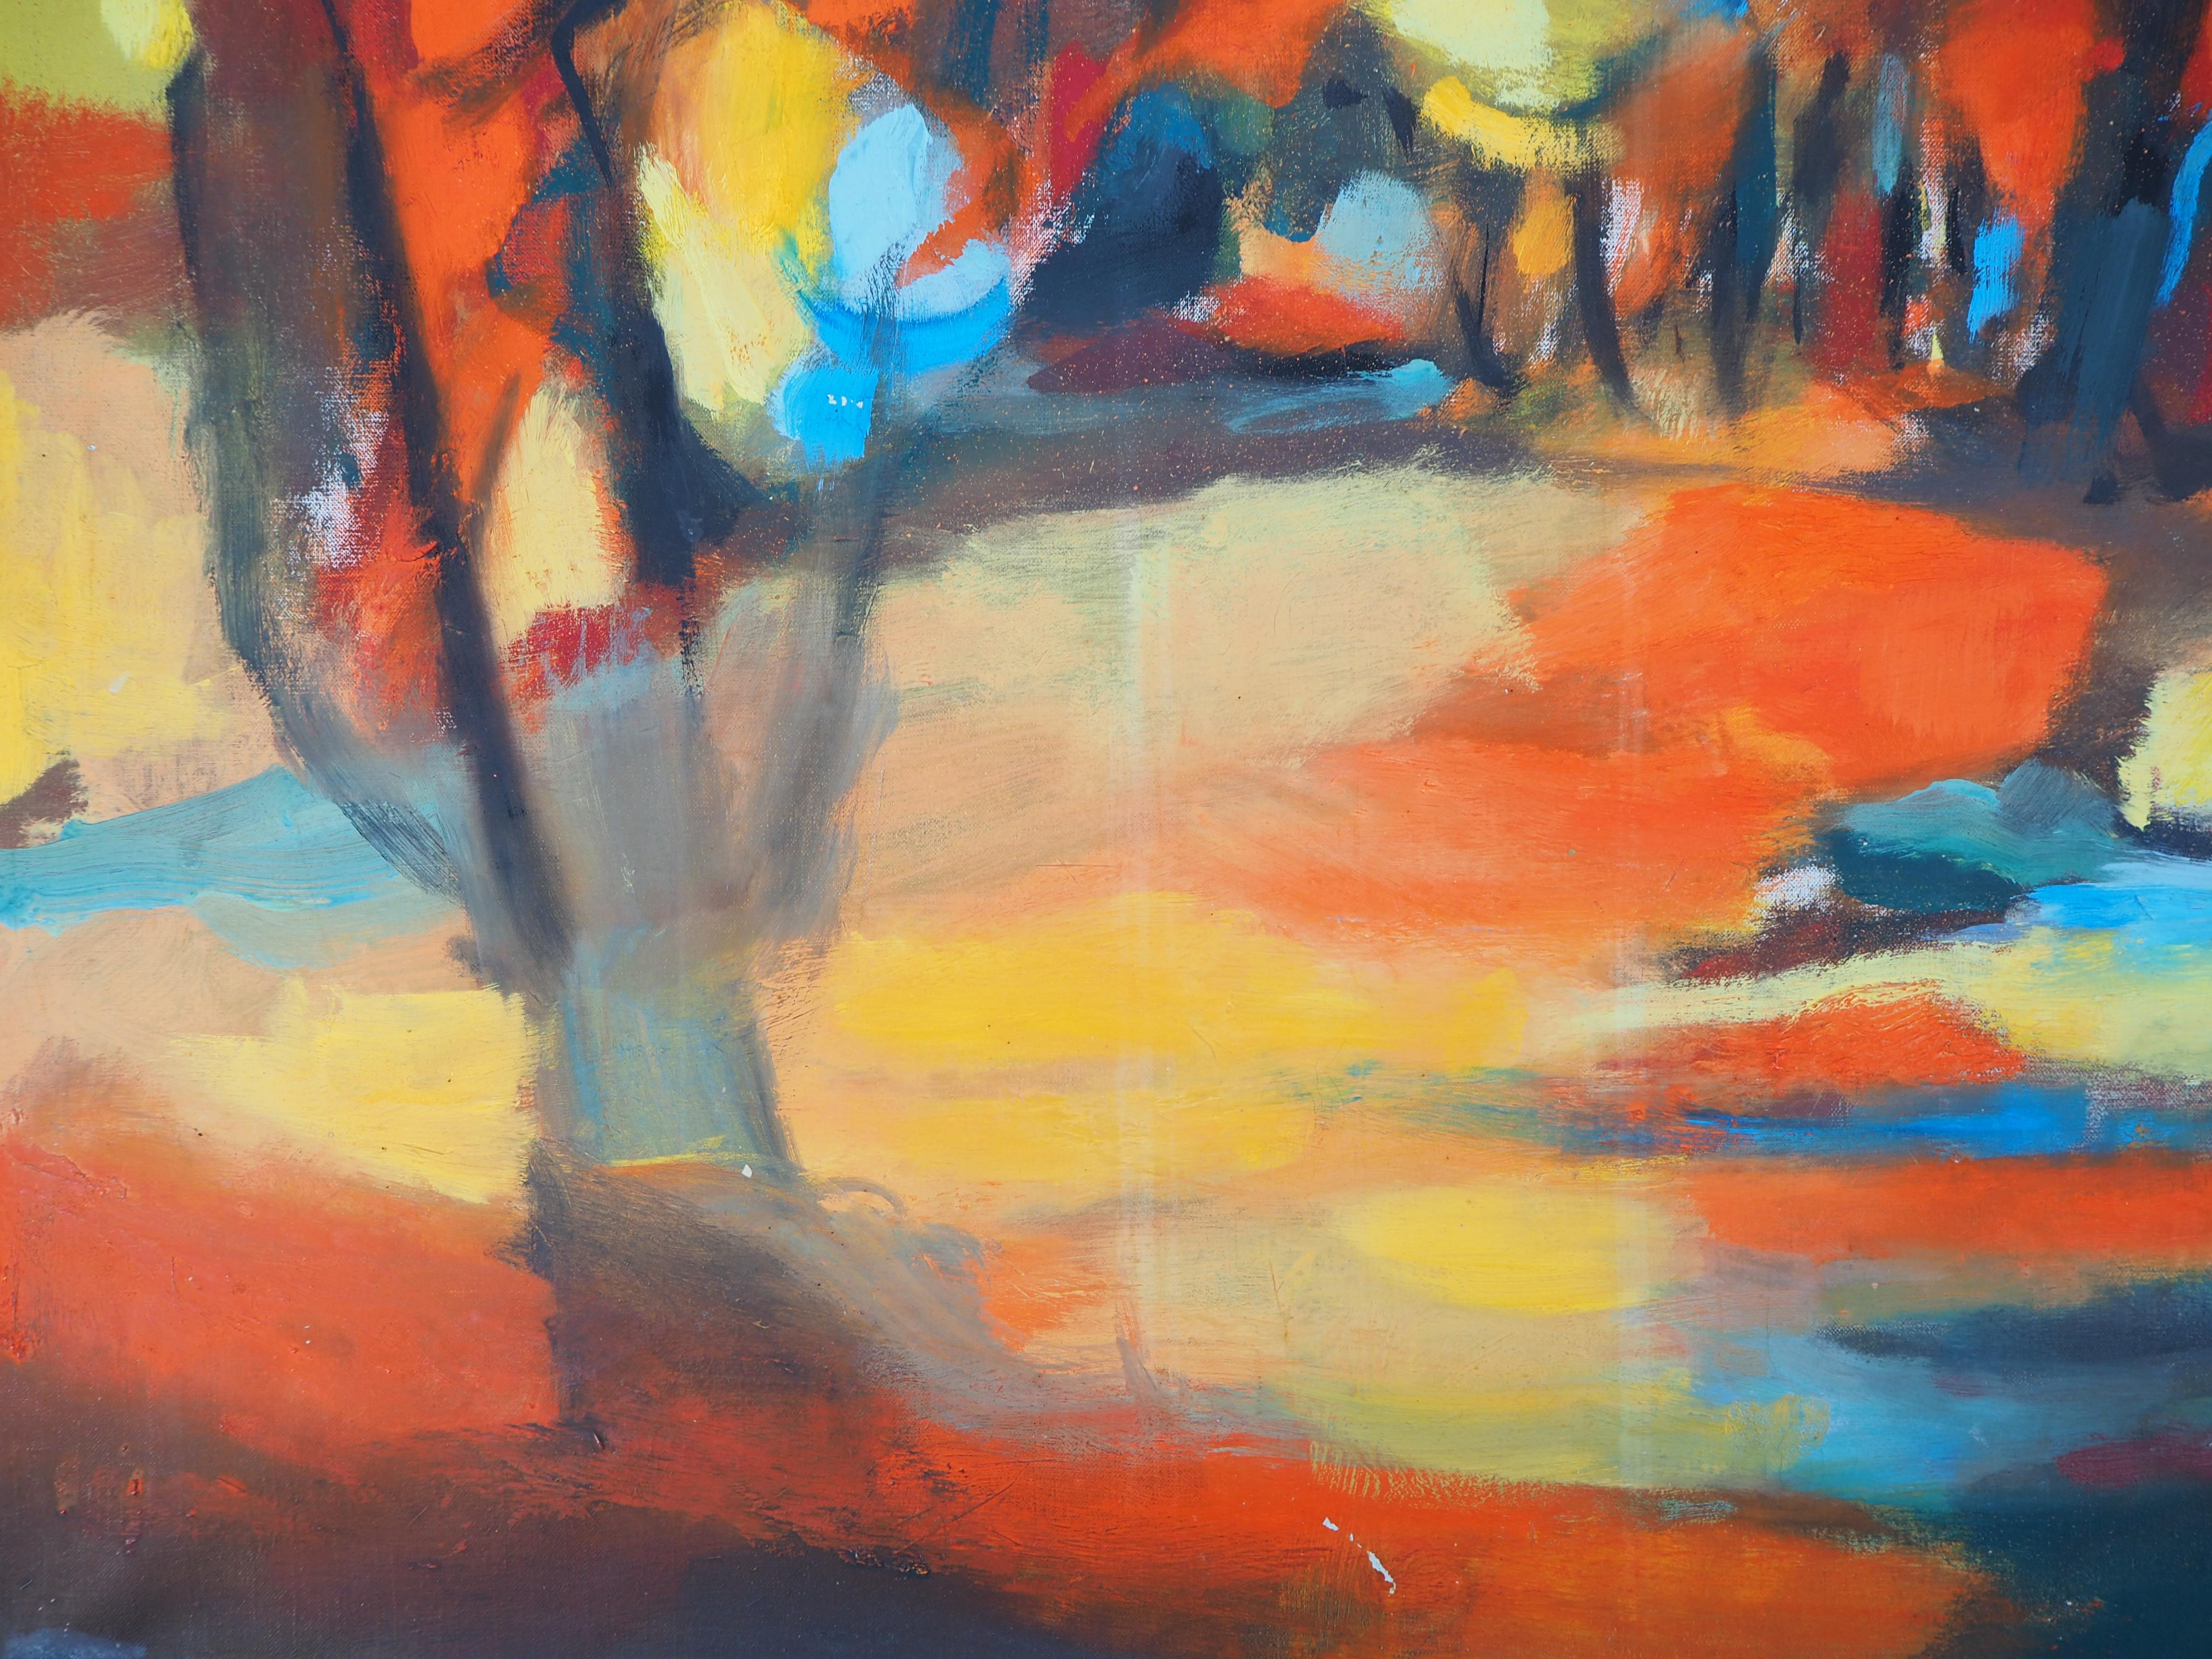 Forrest during Summer - Original oil painting on canvas, Handsigned and Framed 3